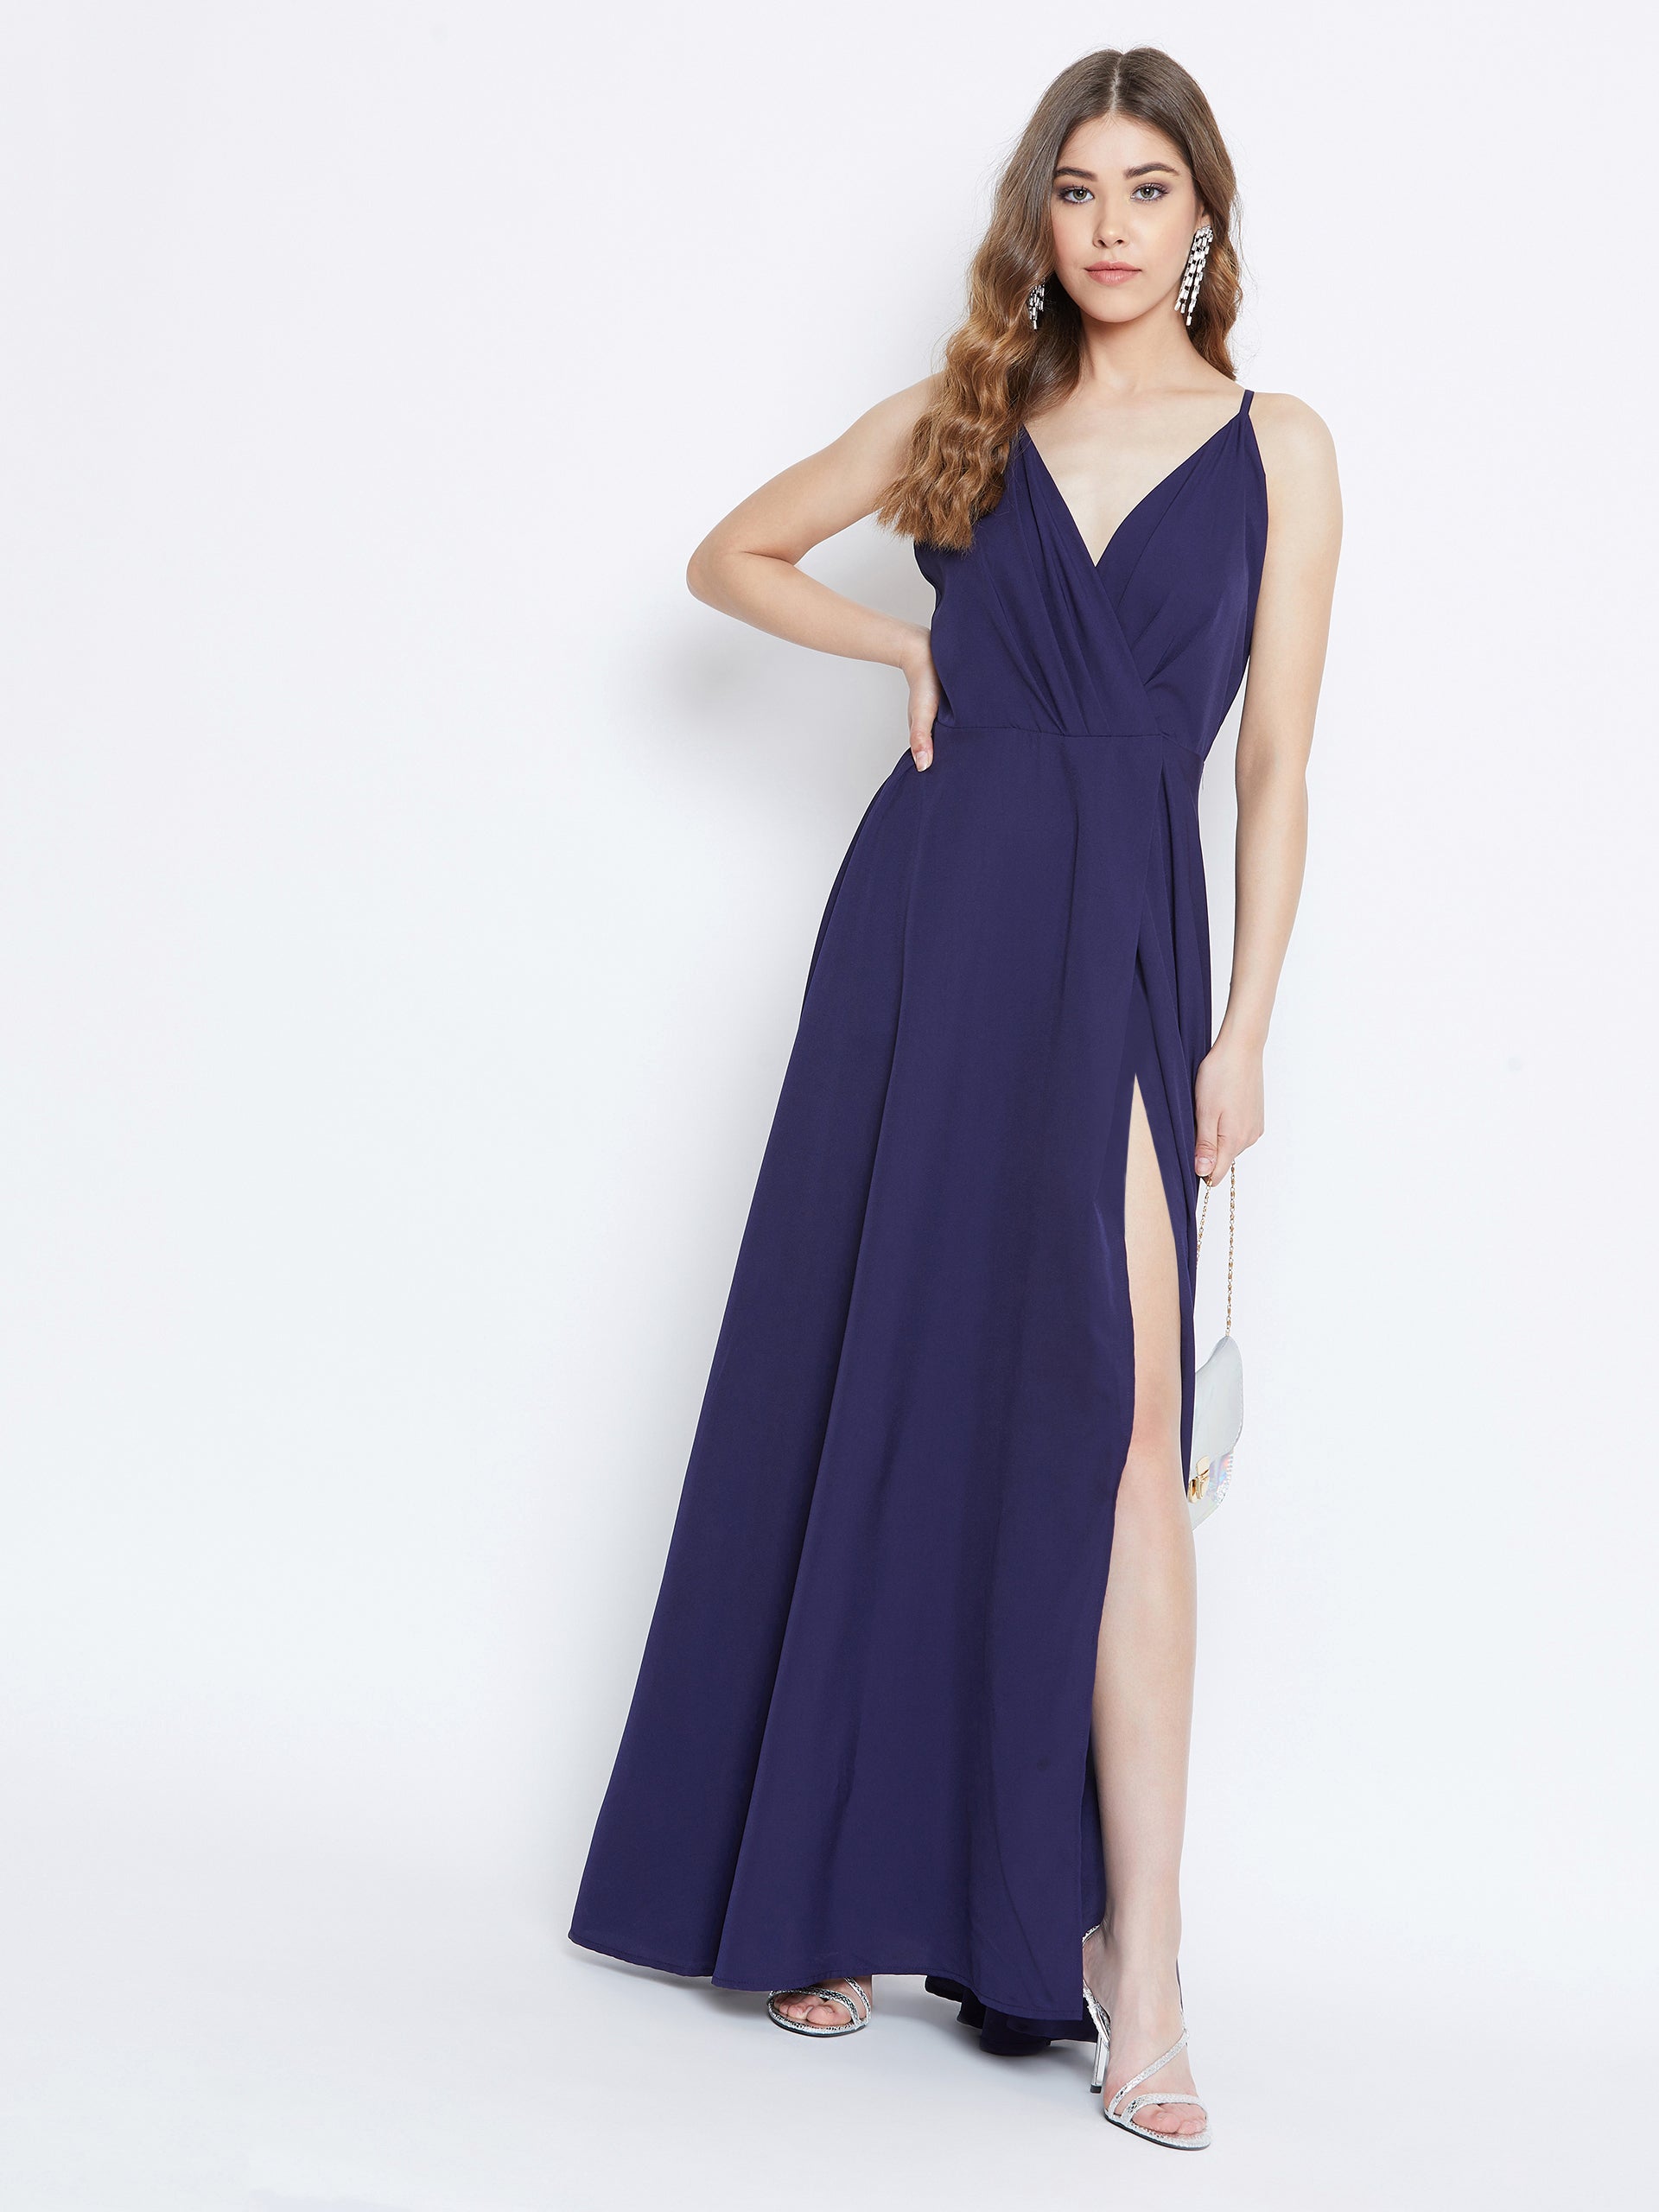 Berrylush Women Solid Navy Blue V-Neck Thigh-High Slit Fit & Flare Maxi Dress